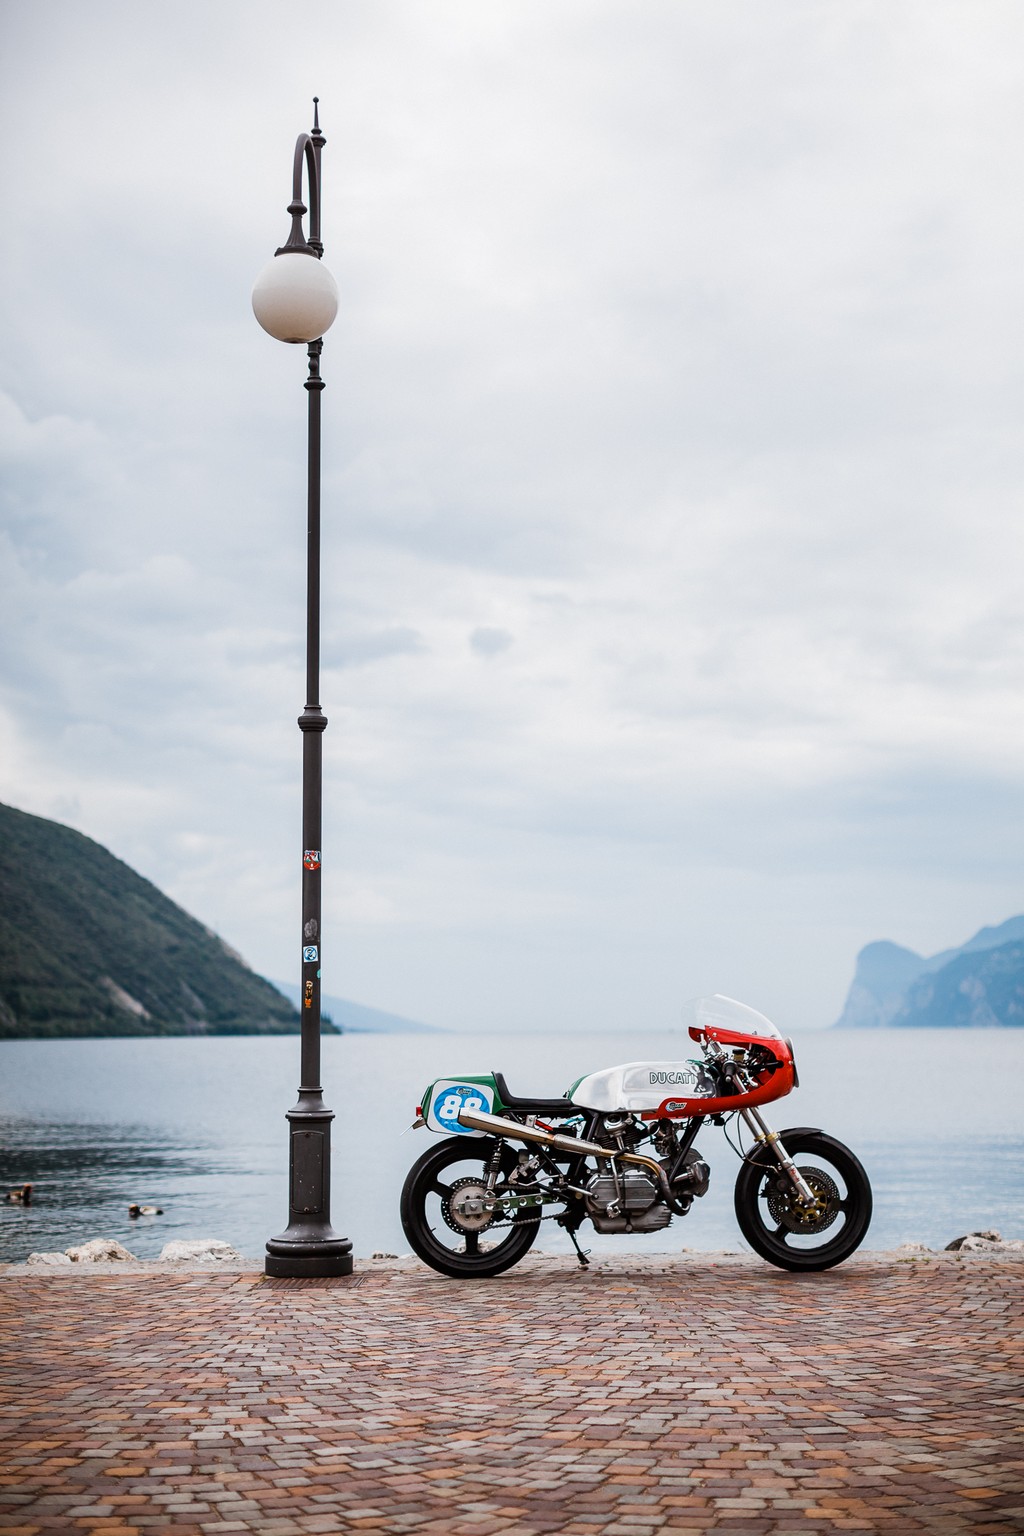 Ducati Road Racer motorcycle parked beside an Italian Lake